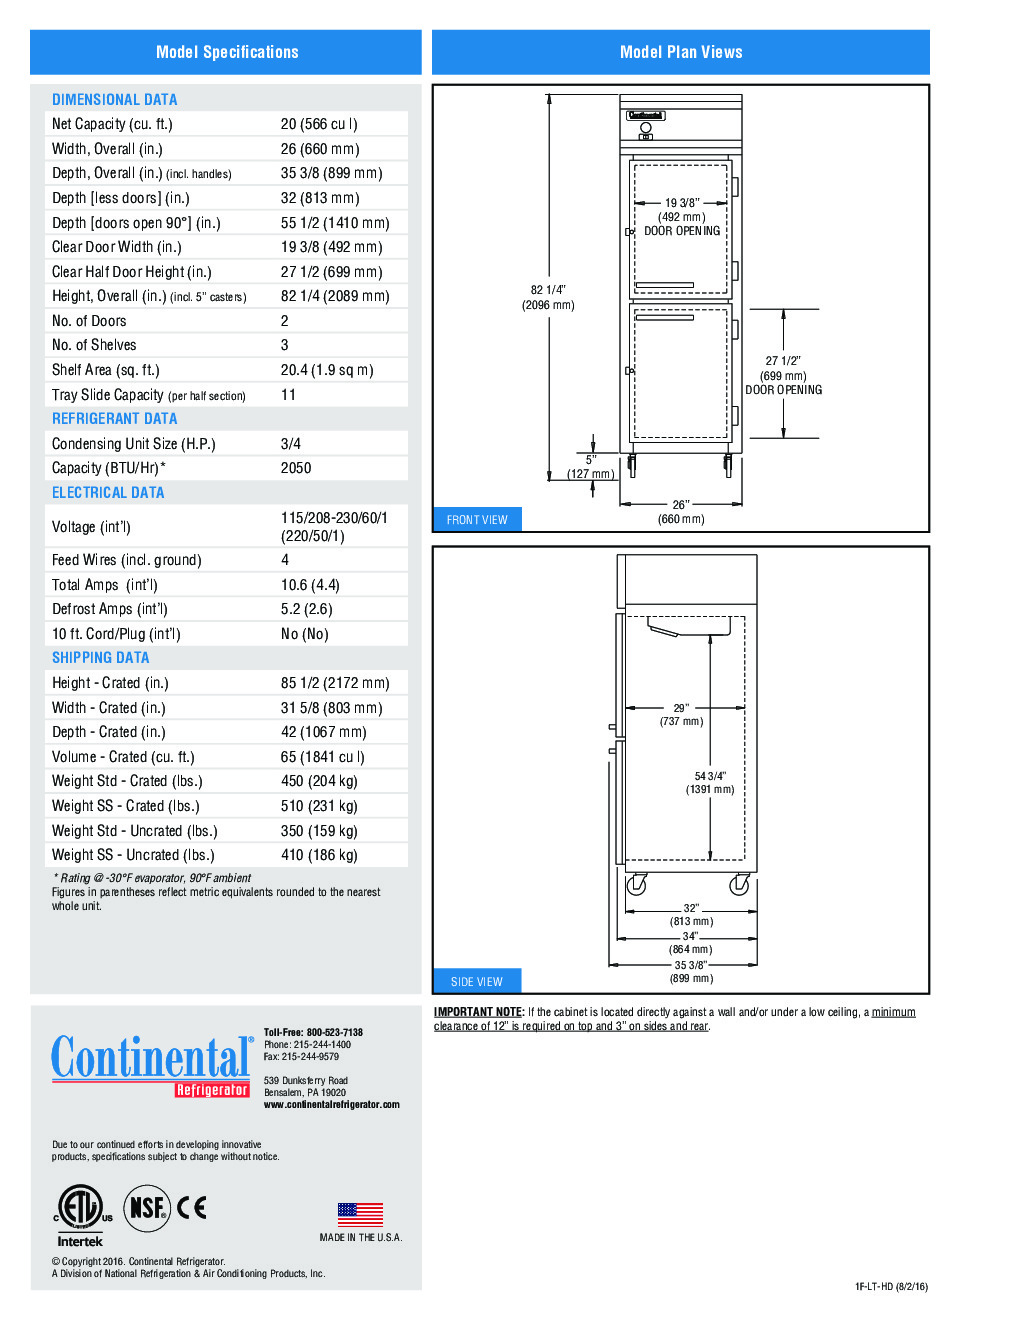 Continental Refrigerator 1F-LT-HD Reach-In Low Temperature Freezer